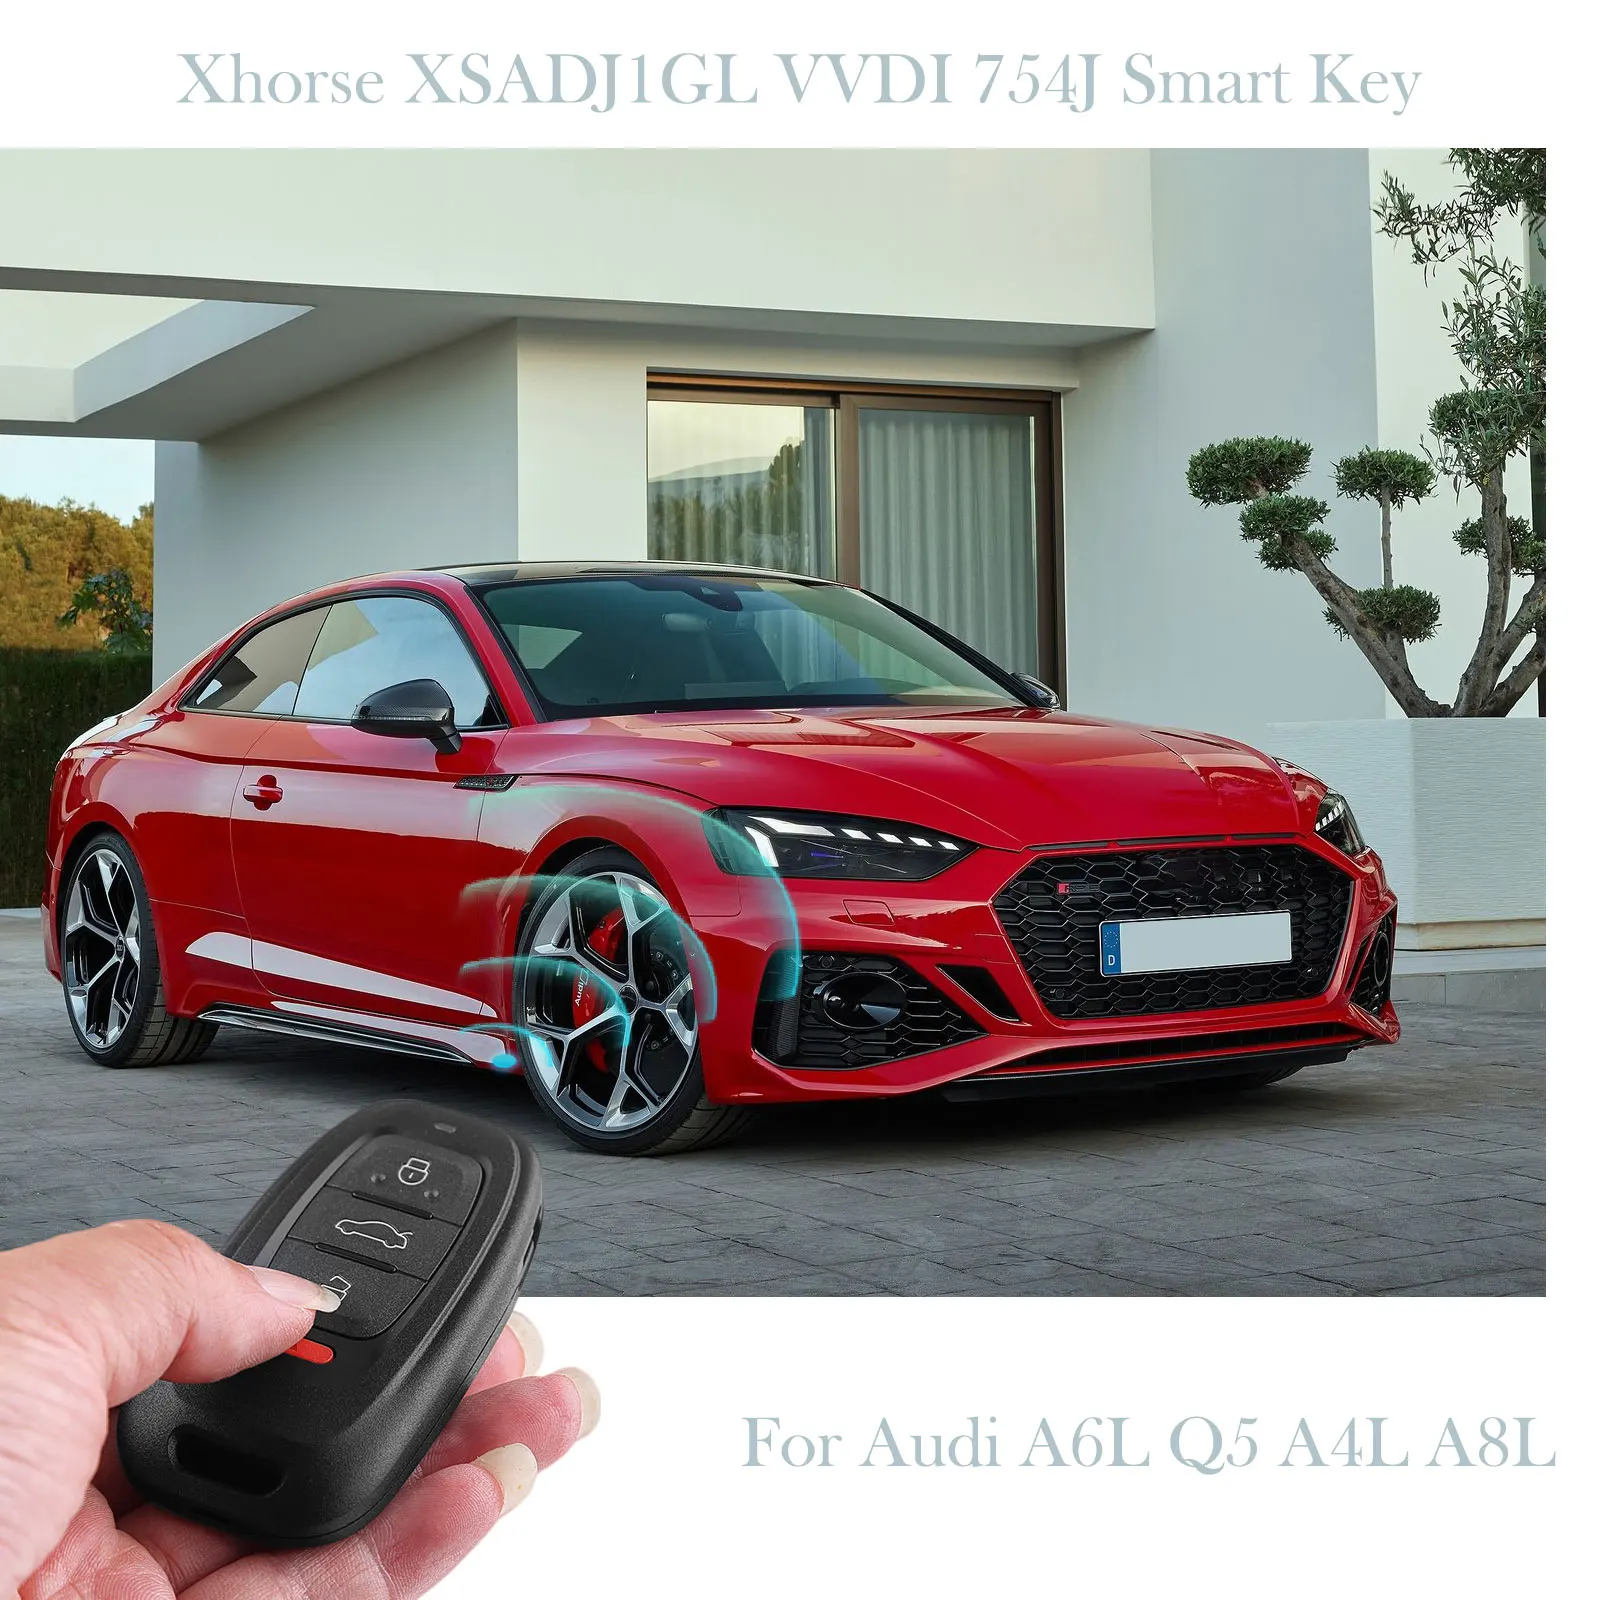 Xhorse XSADJ1GL VVDI 754J смарт-ключ для Audi 315/433/868 МГц A6L Q5 A4L A8L с корпусом ключа [новейшая